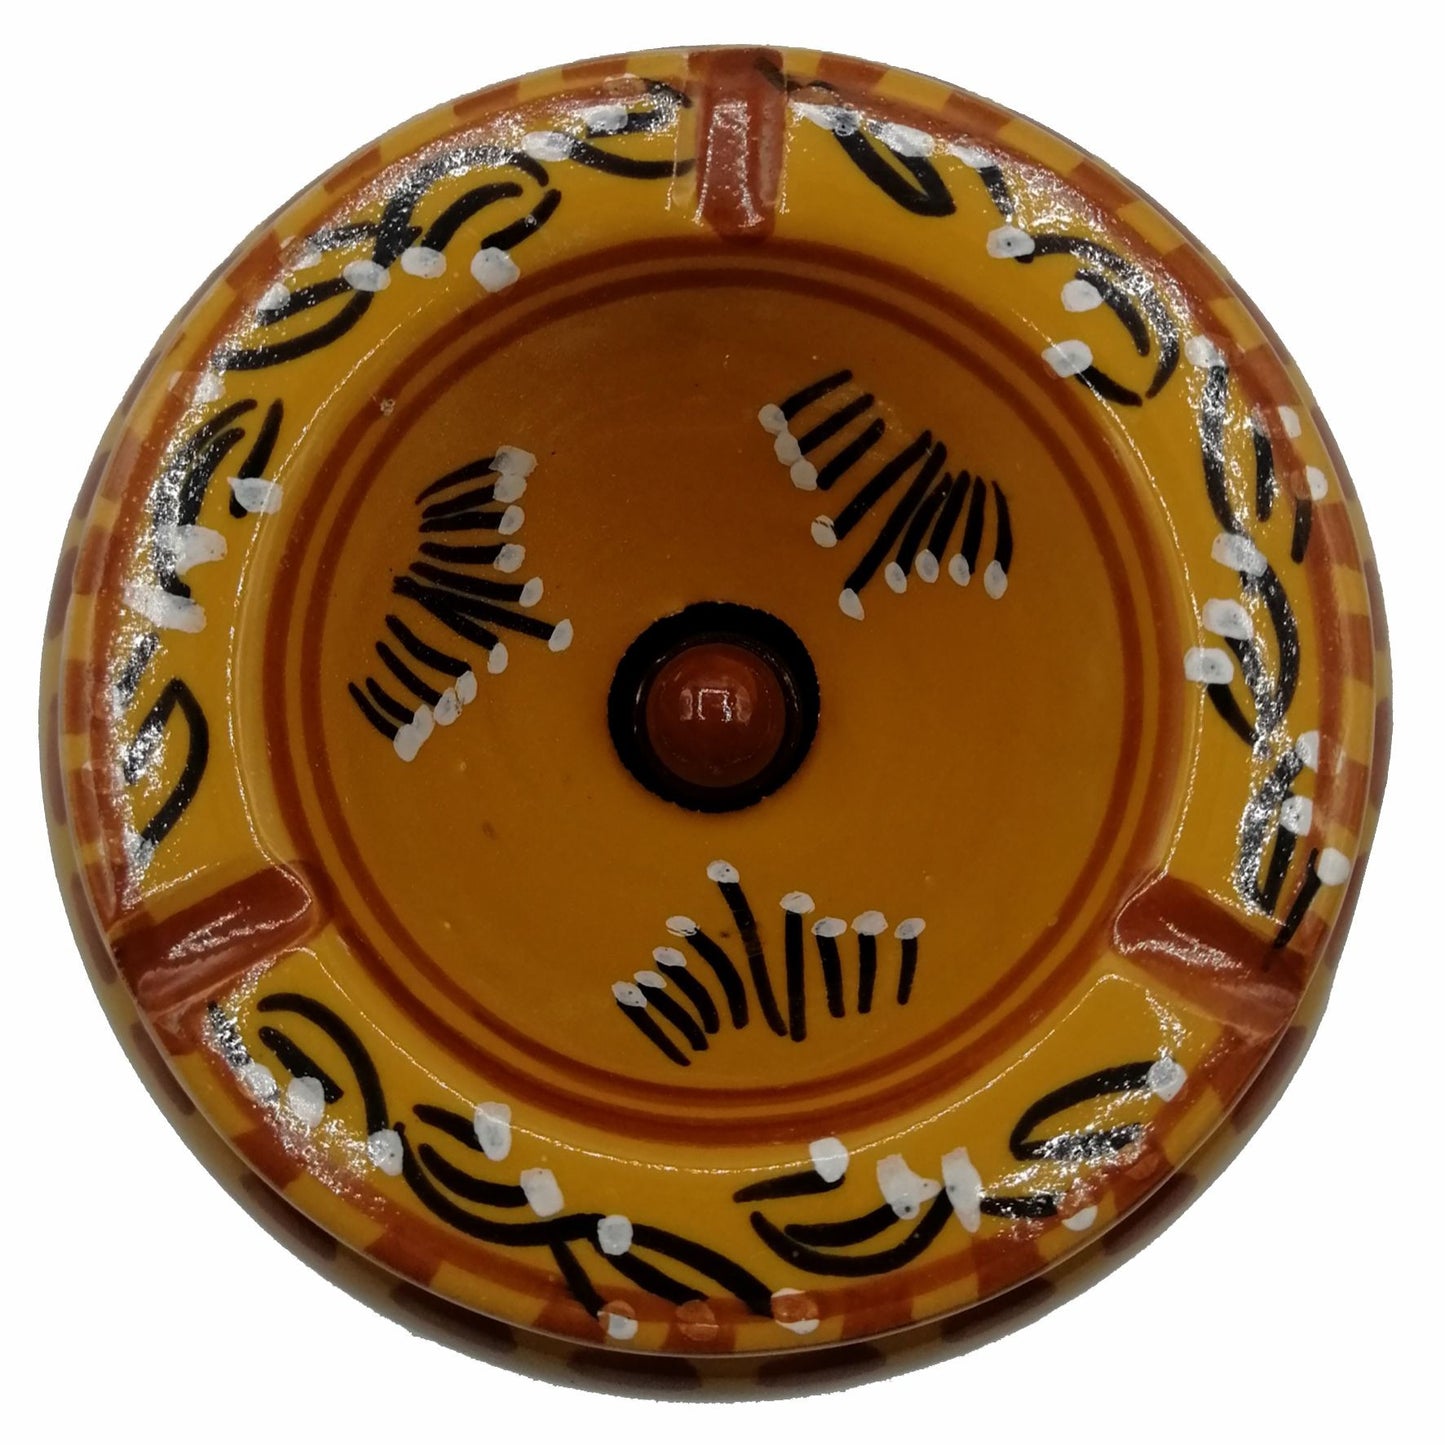 Etnico Arredo Posacenere Ceramica Antiodore Tunisina Marocchine 1011200806